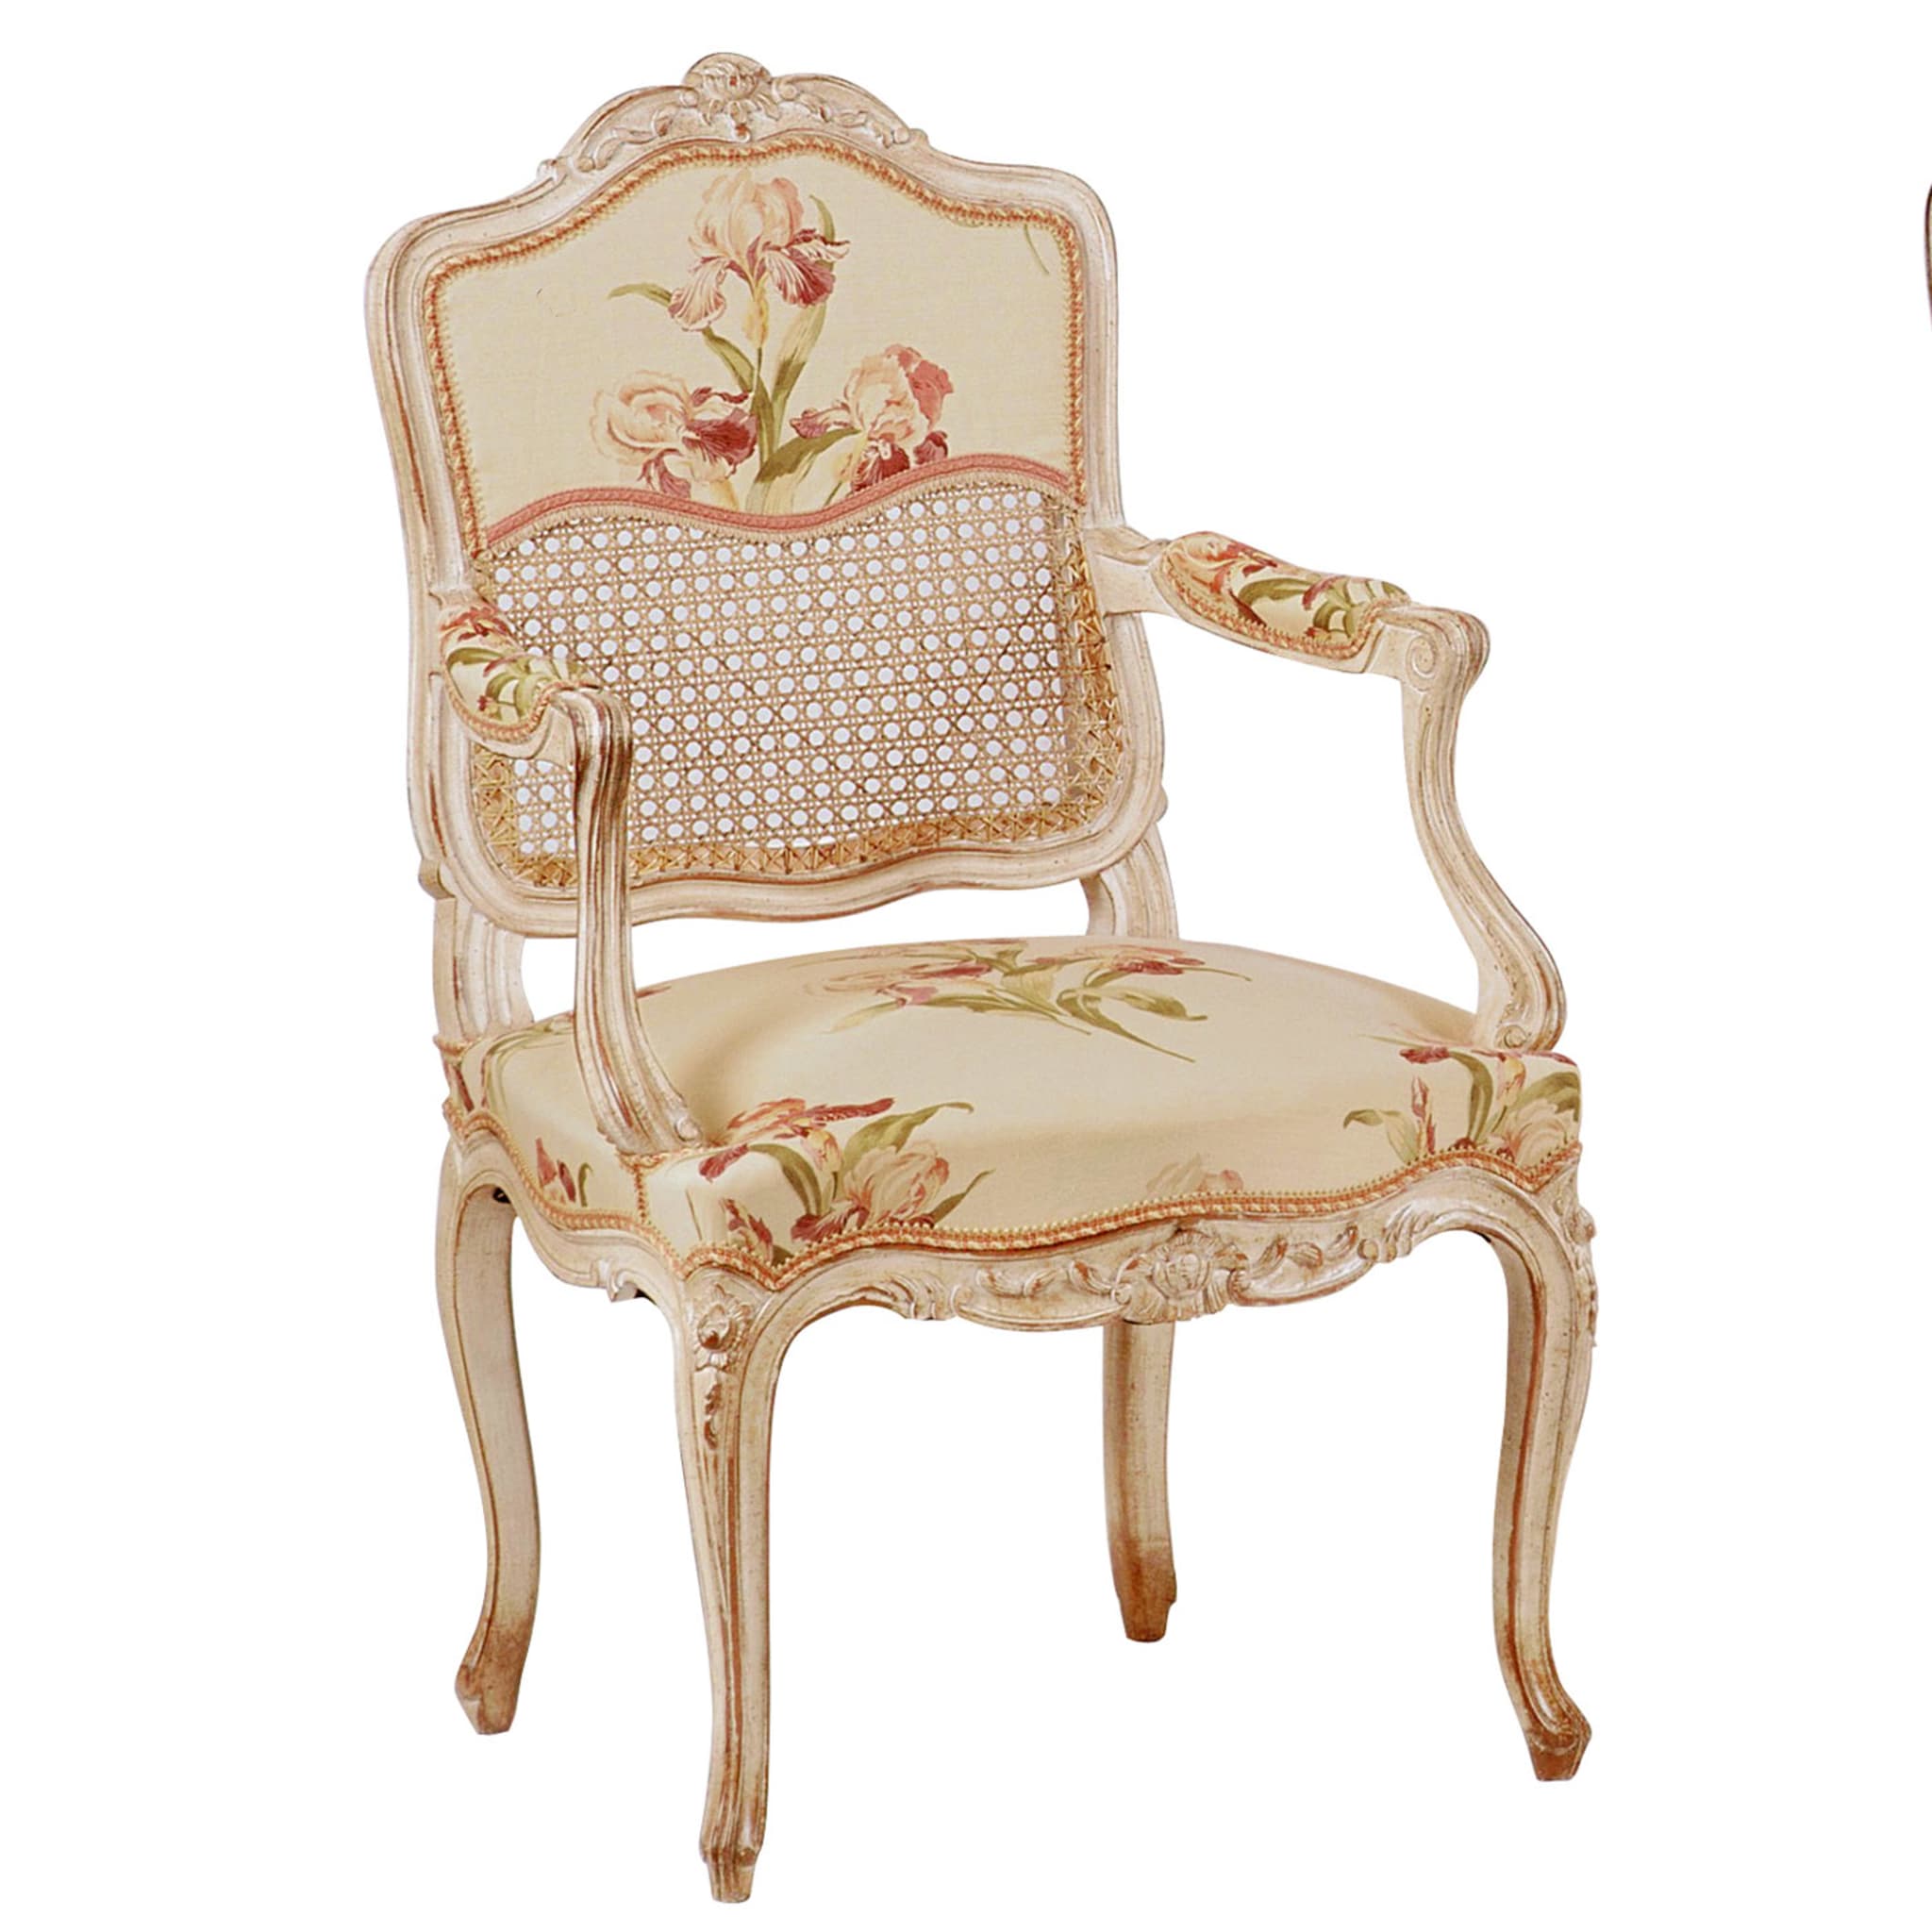 Louis XV-Style Floral White Chair #1 - Alternative view 1